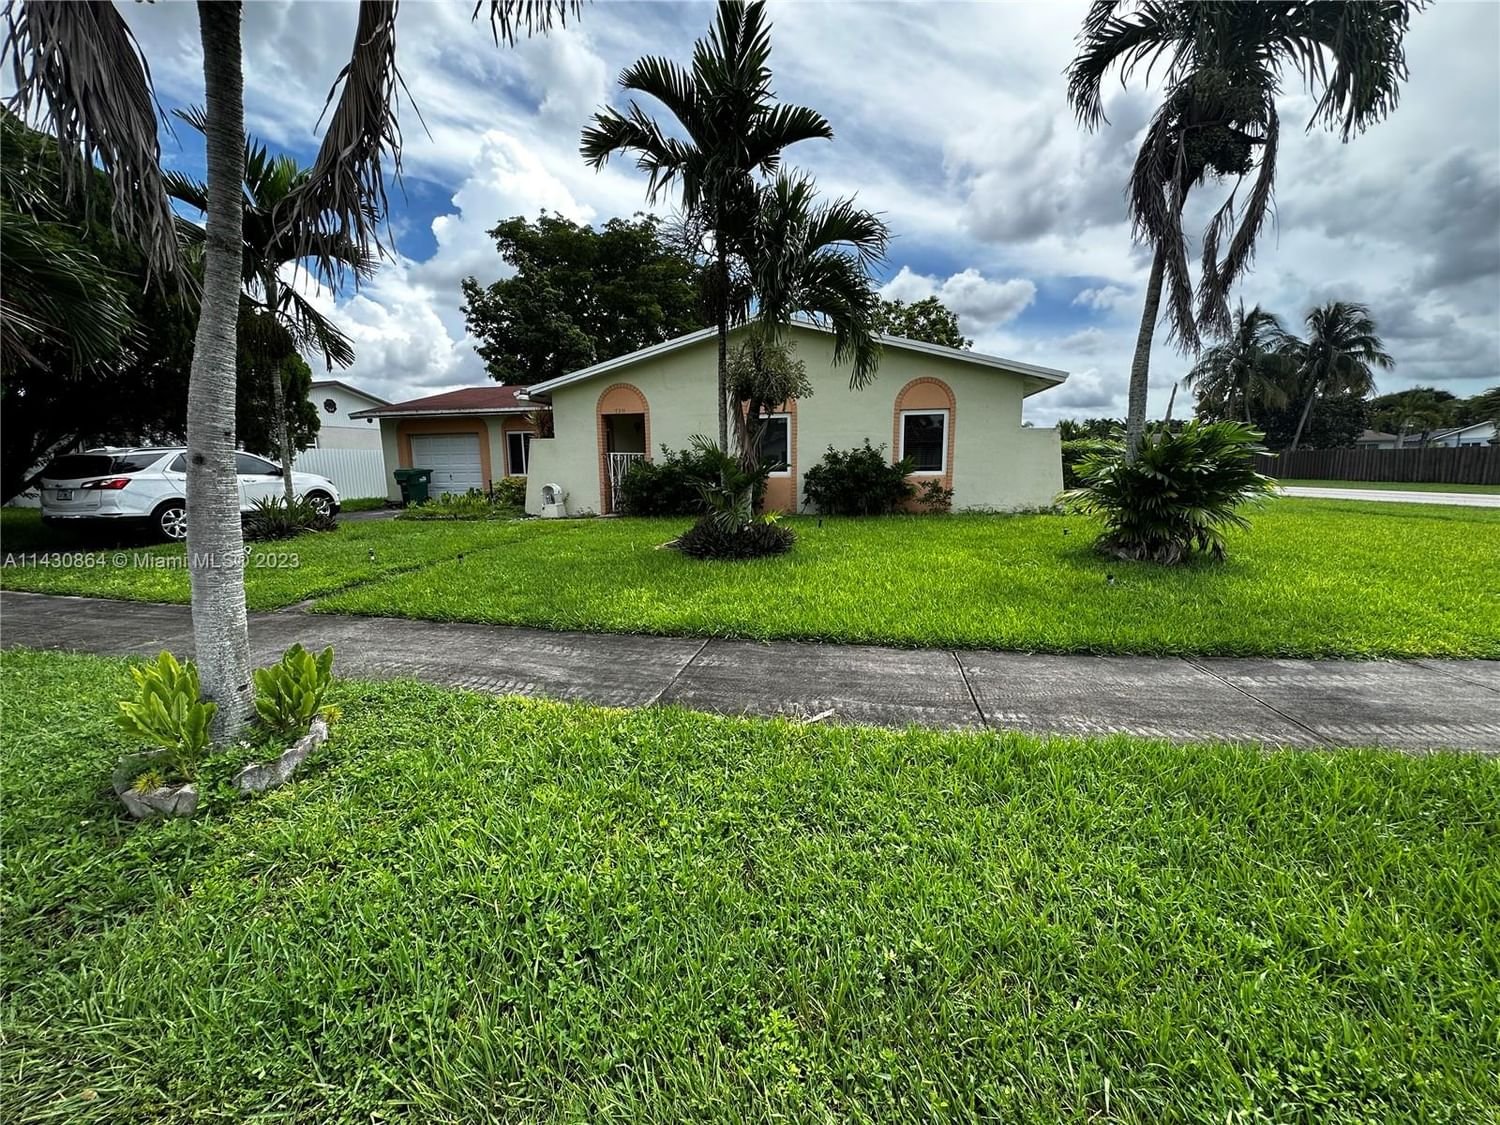 Real estate property located at 7311 130th Ave, Miami-Dade County, Miami, FL